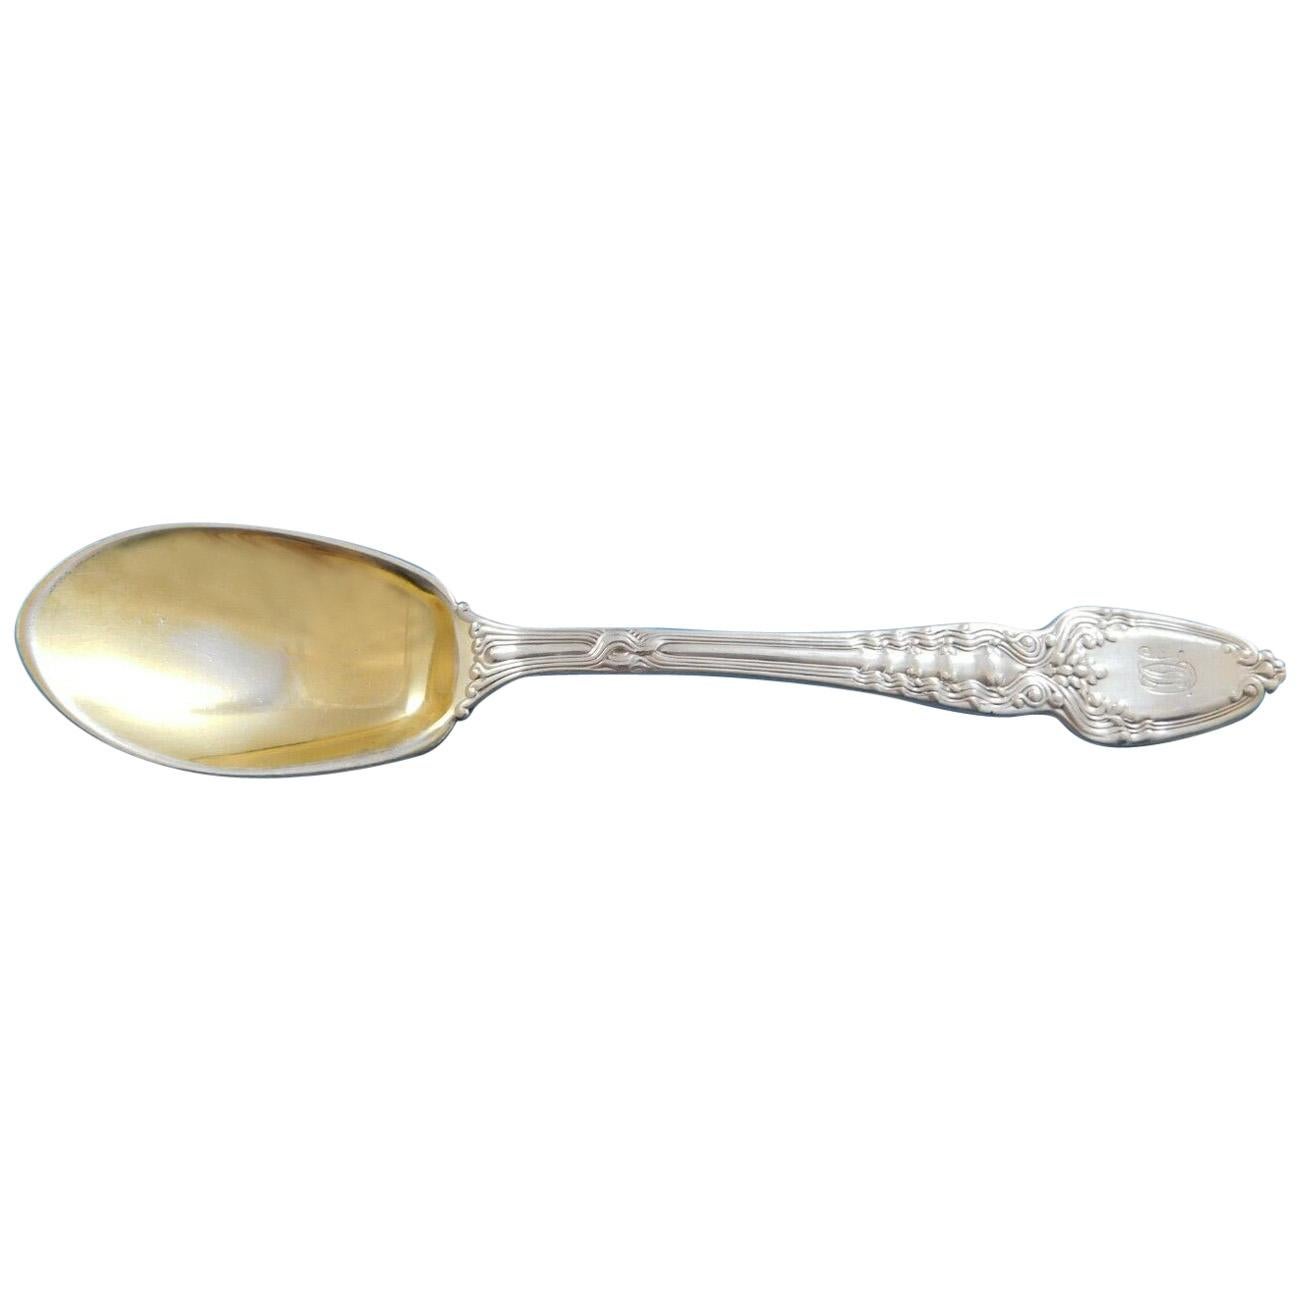 Broom Corn by Tiffany & Co. Sterling Silver Ice Cream Spoon Plain Bowl GW